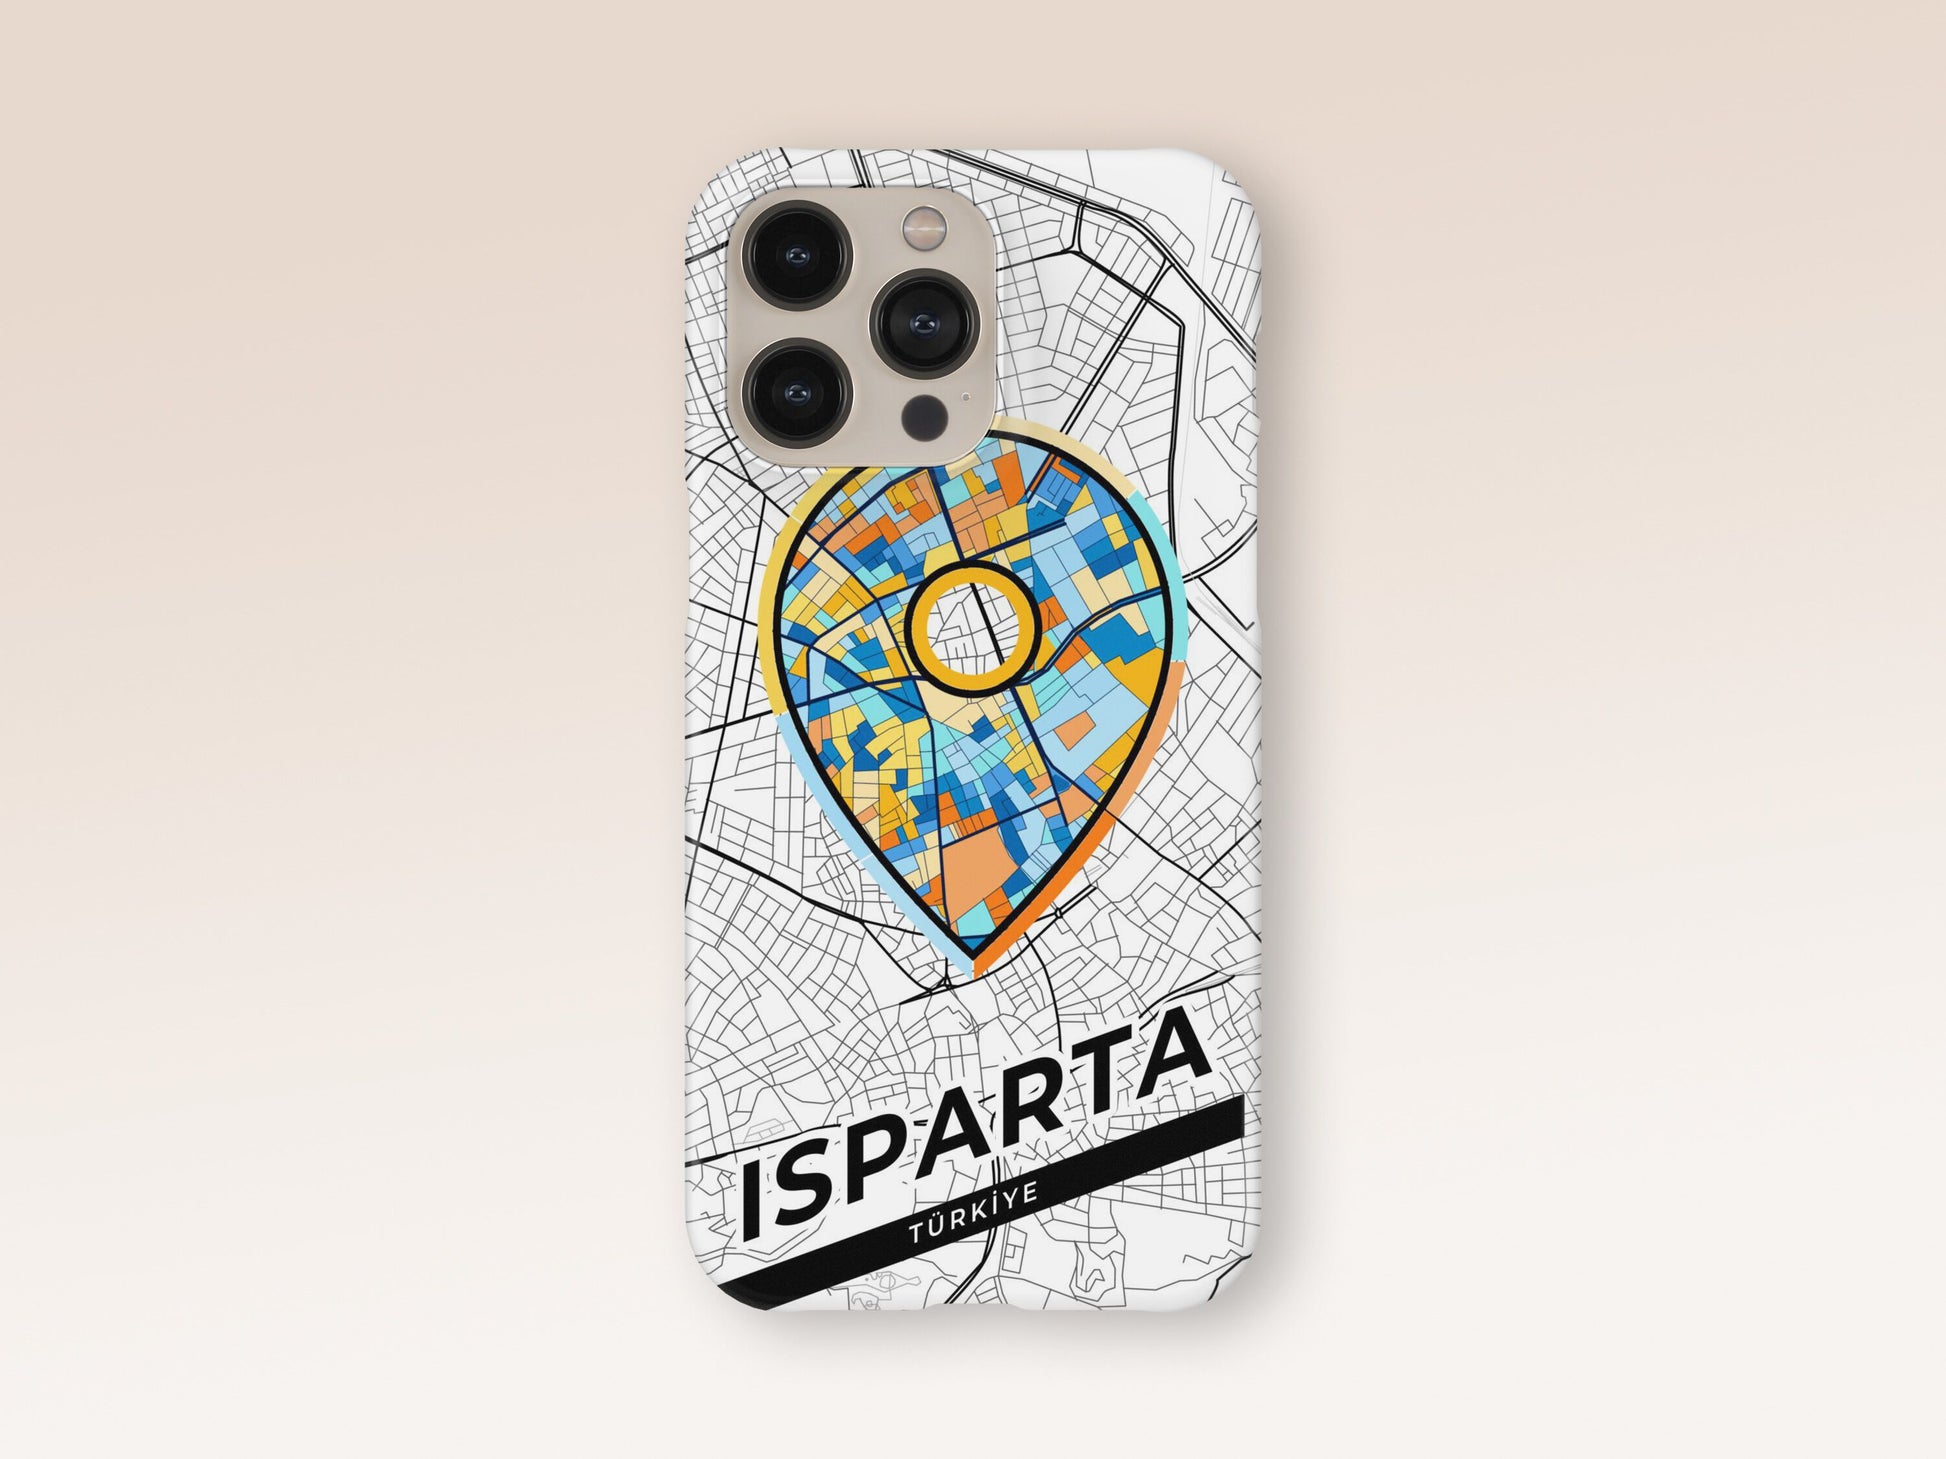 Isparta Turkey slim phone case with colorful icon. Birthday, wedding or housewarming gift. Couple match cases. 1